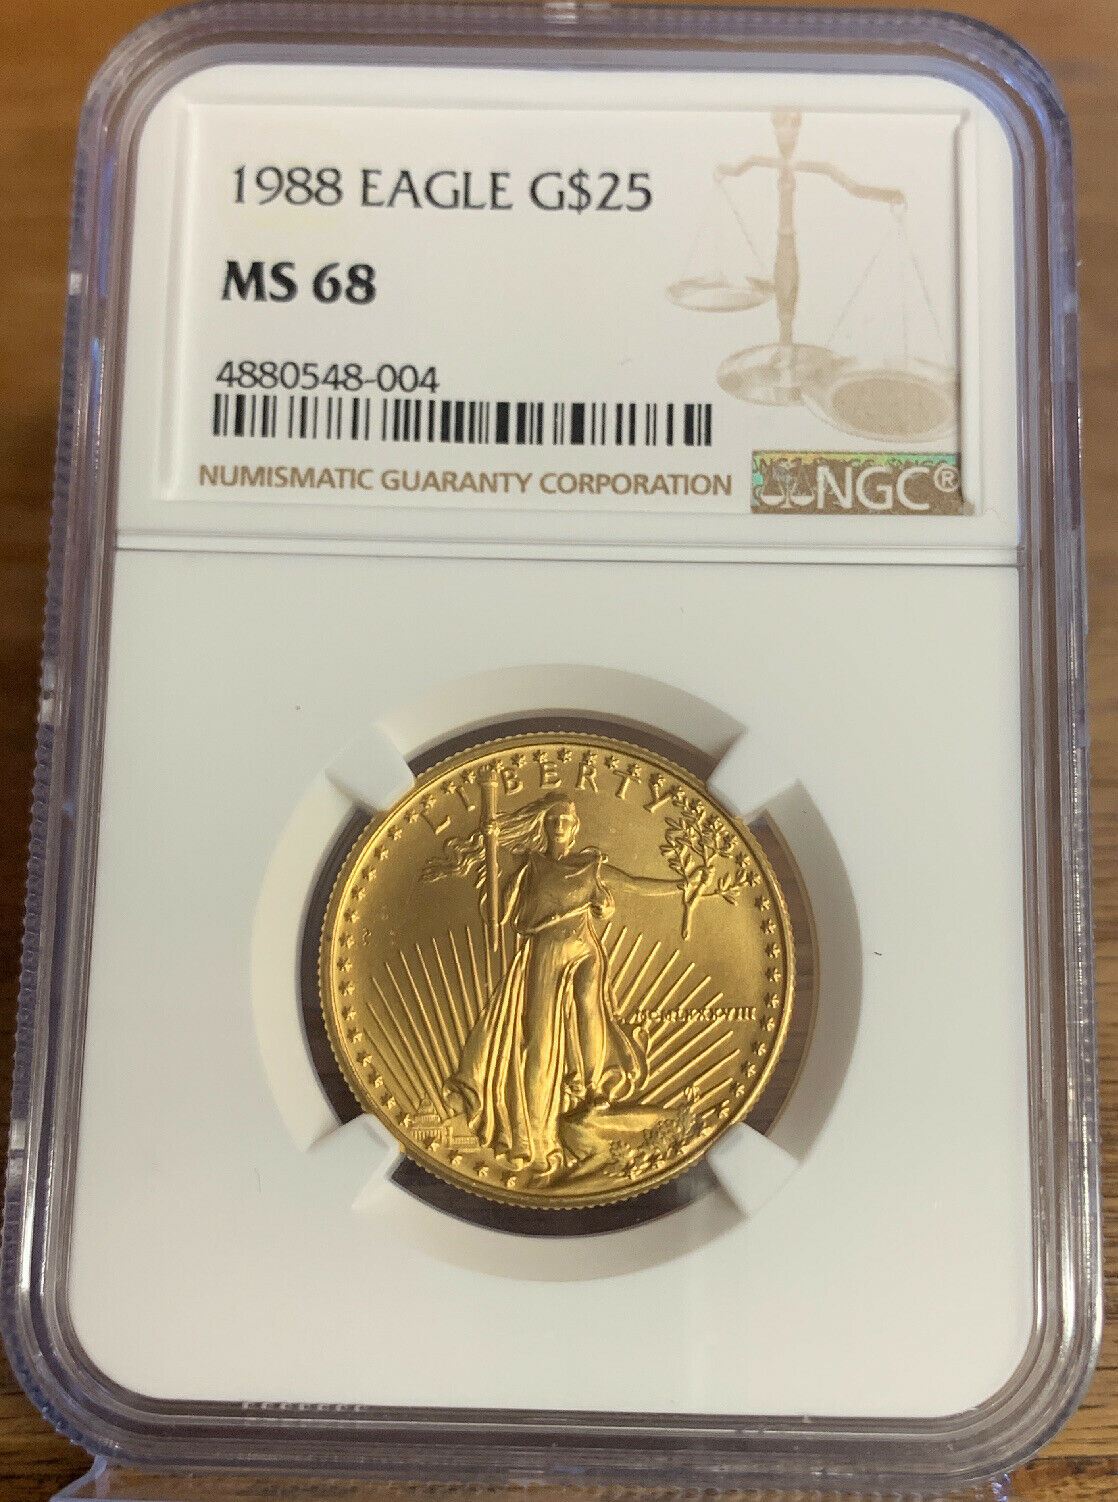 1988 Eagle G$25 NGC Grade MS 68 Gold Coin AH004 - Chula ...